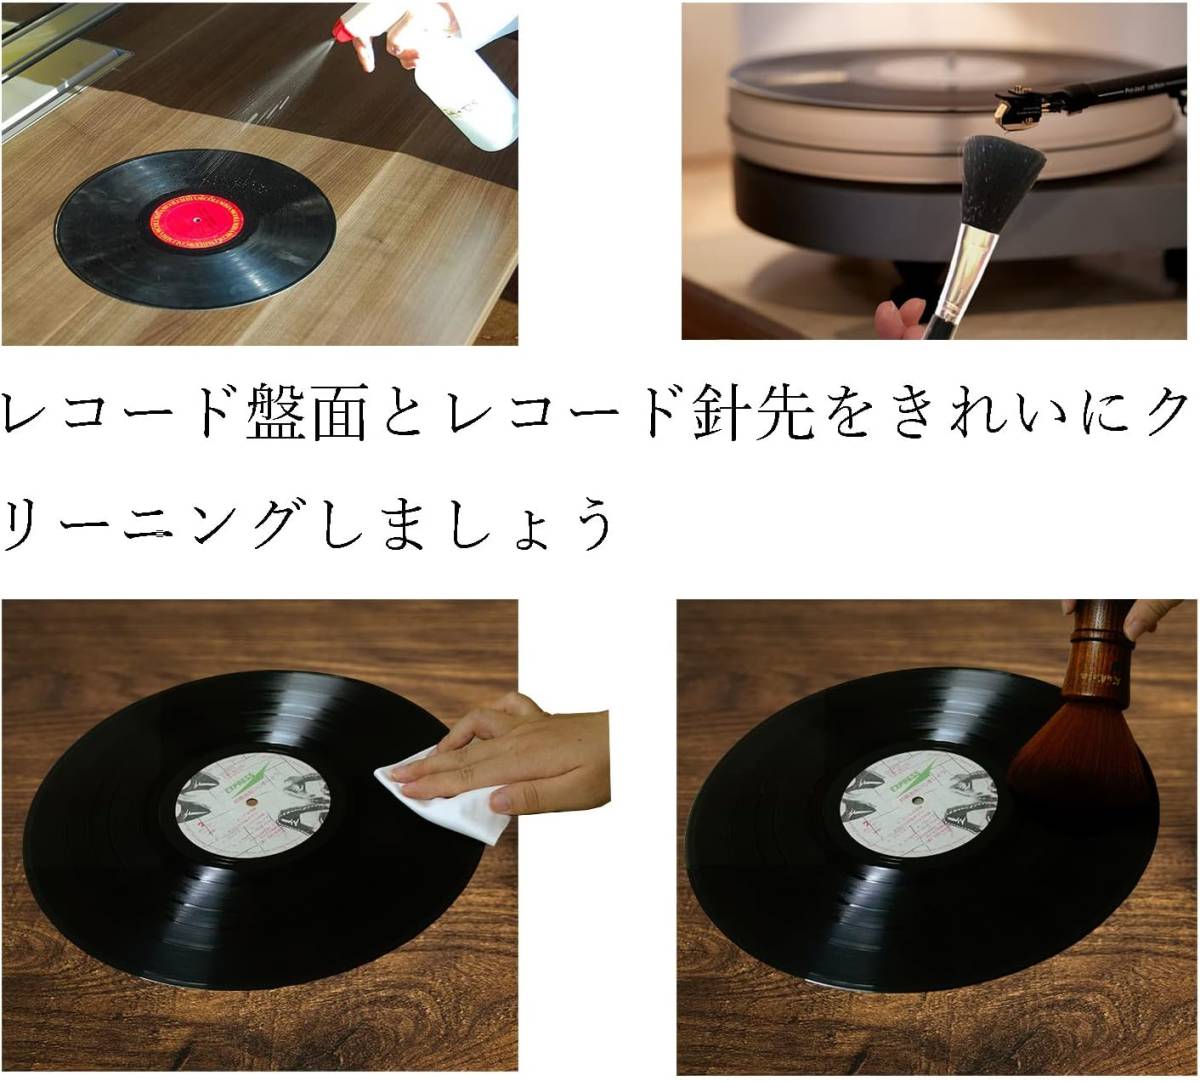 Kukefa レコードクリーナー ほ こりとり LP清掃 ブラシ木製 レコード クリーナー 静電気除去 lpレコードクリーニング_画像4